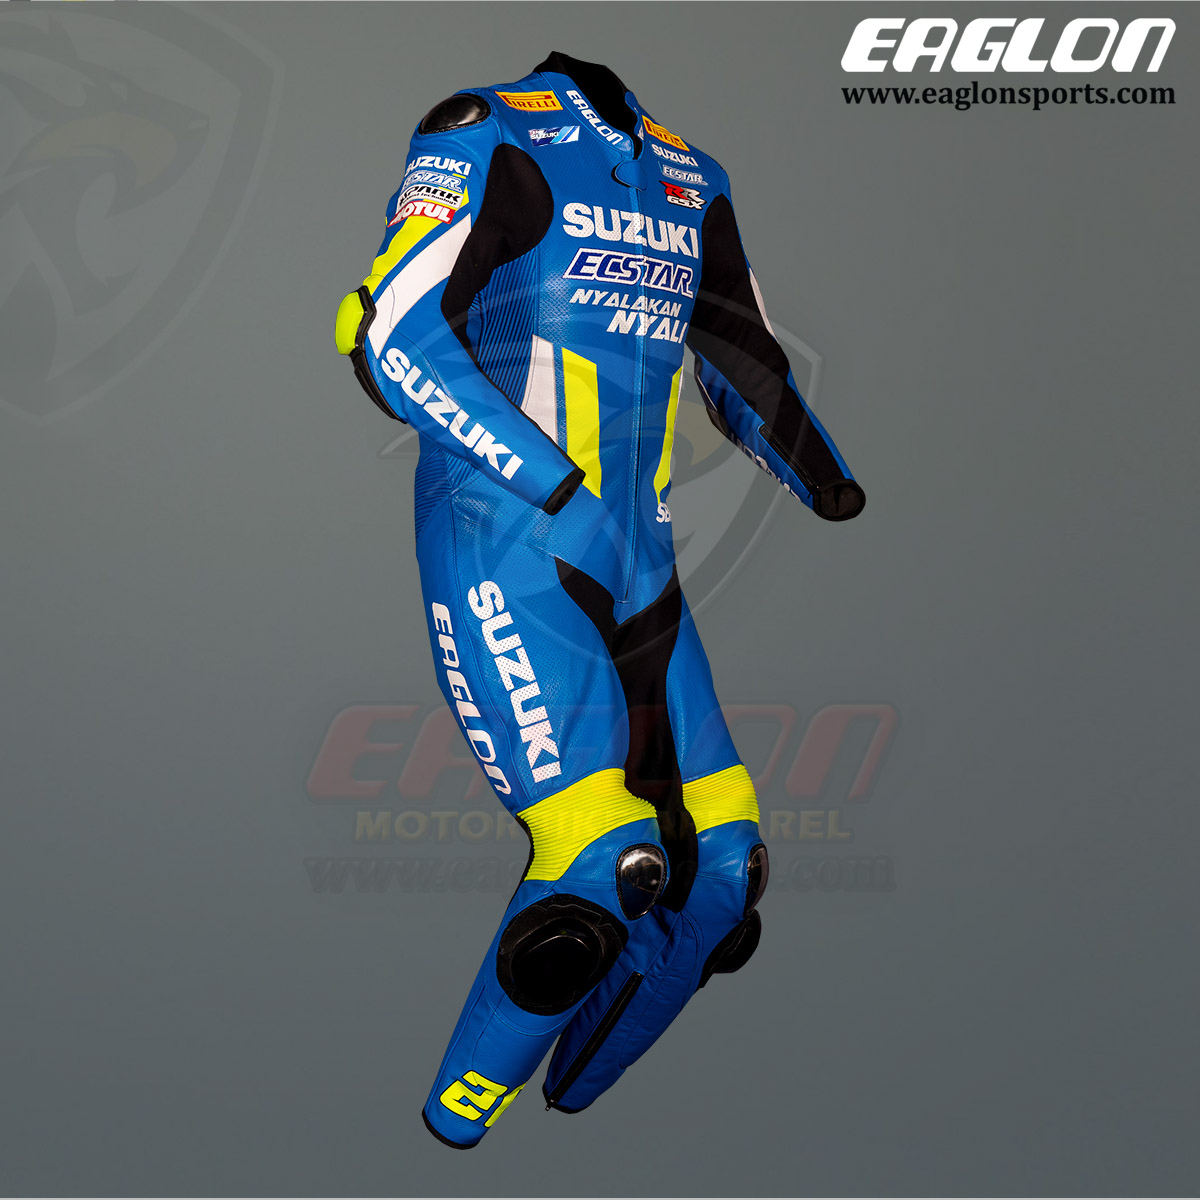 Joan-Mir-Suzuki-Ecstar-MotoGP-2019-Leather-Riding-Suit